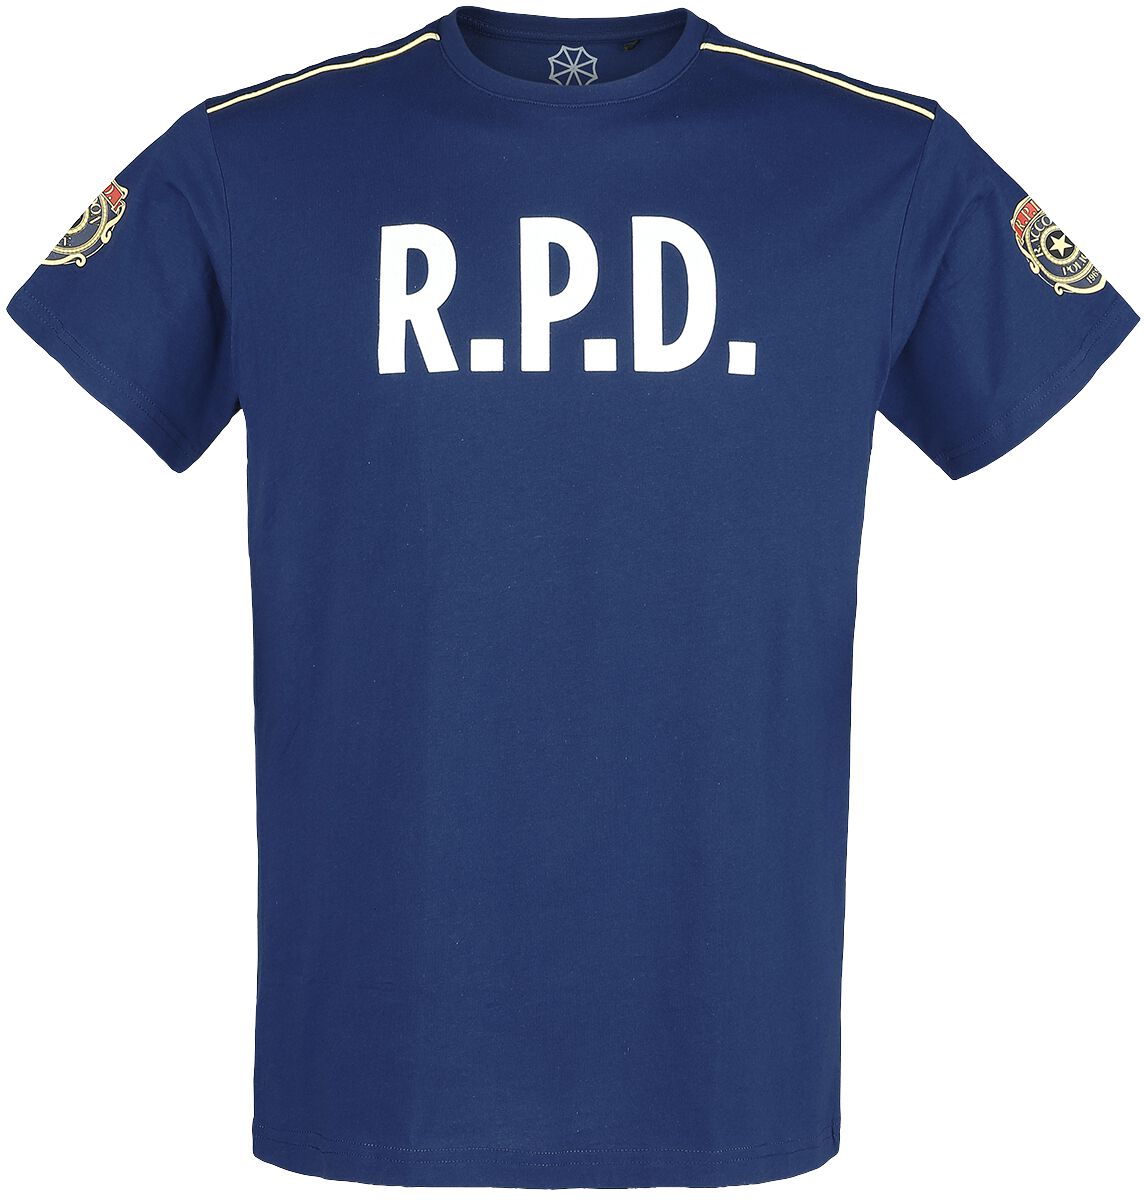 R.P.D. T-Shirt blau von Resident Evil